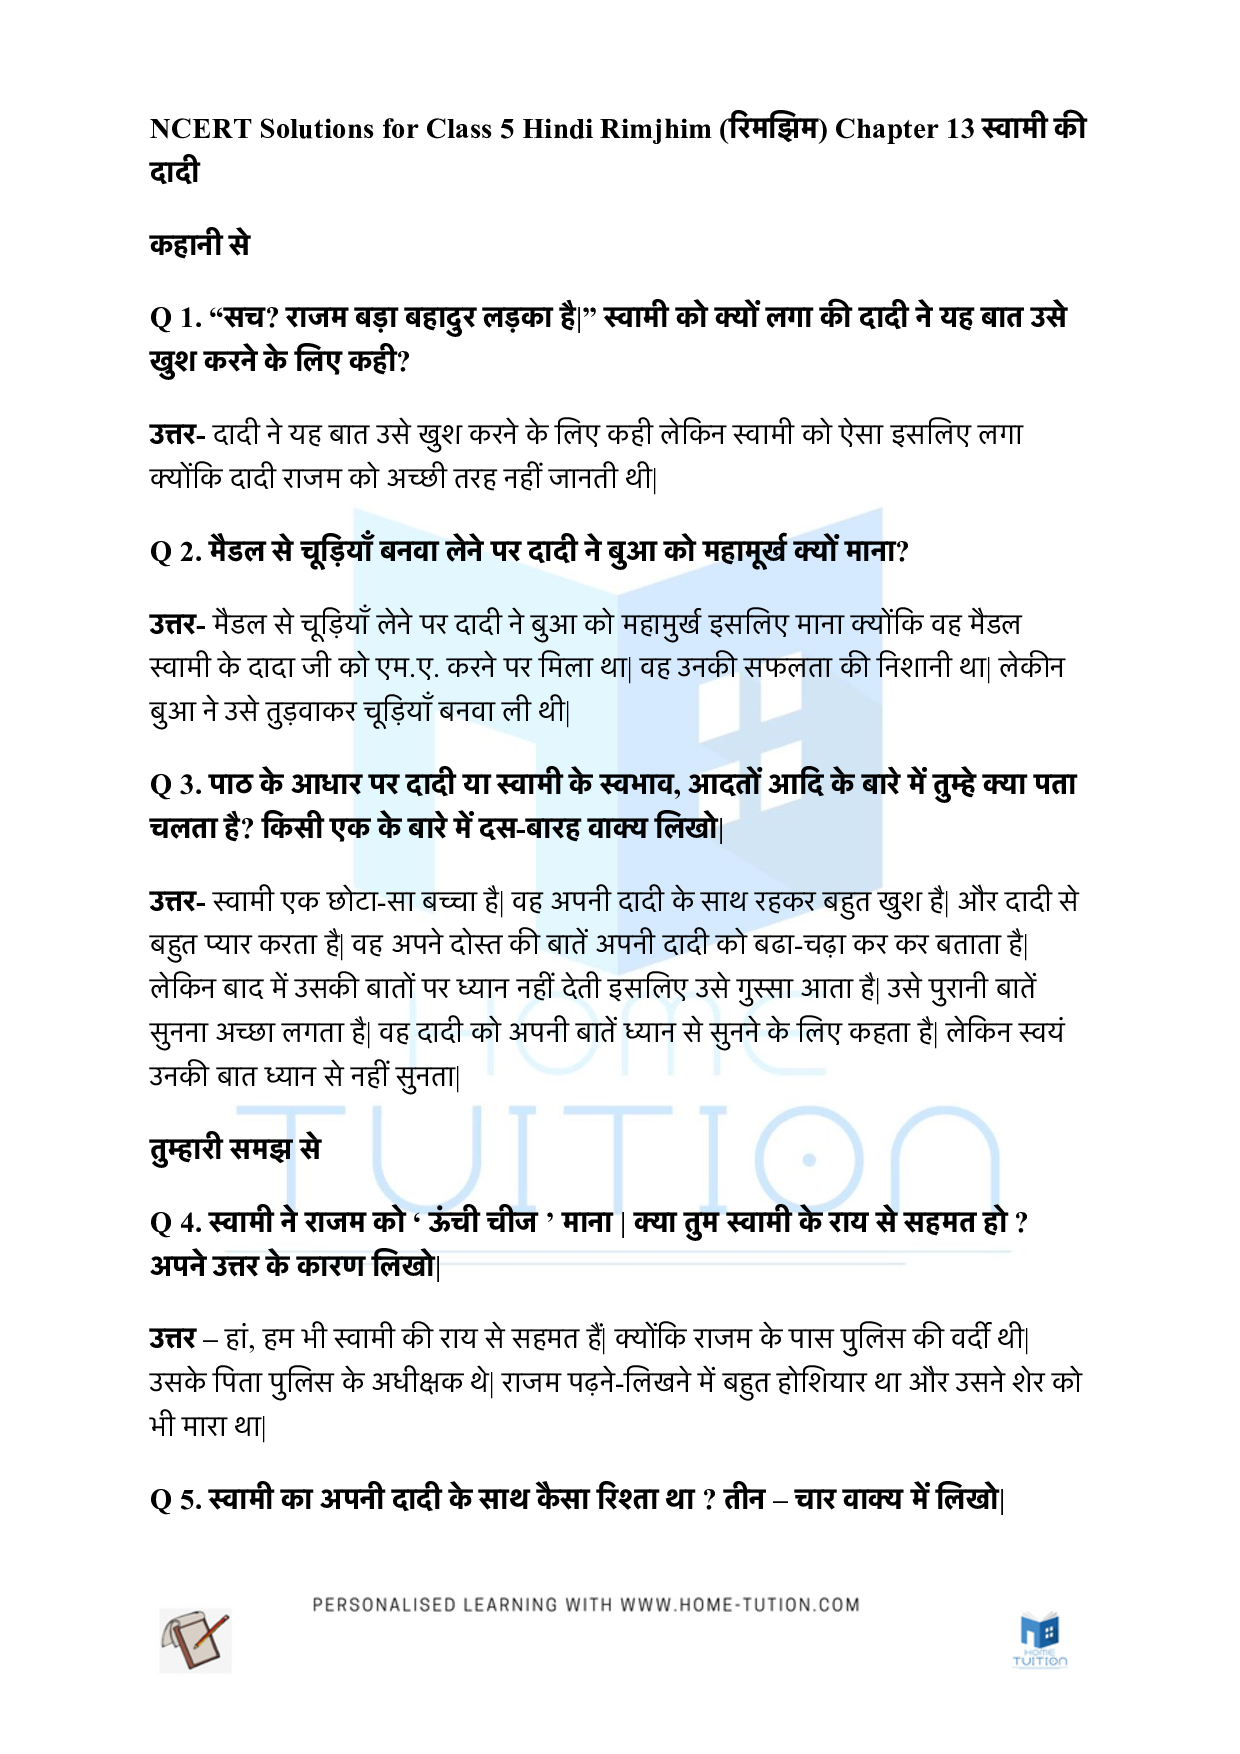 NCERT Solutions for Class 5 Hindi Rimjhim Chapter 13 स्वामी की दादी